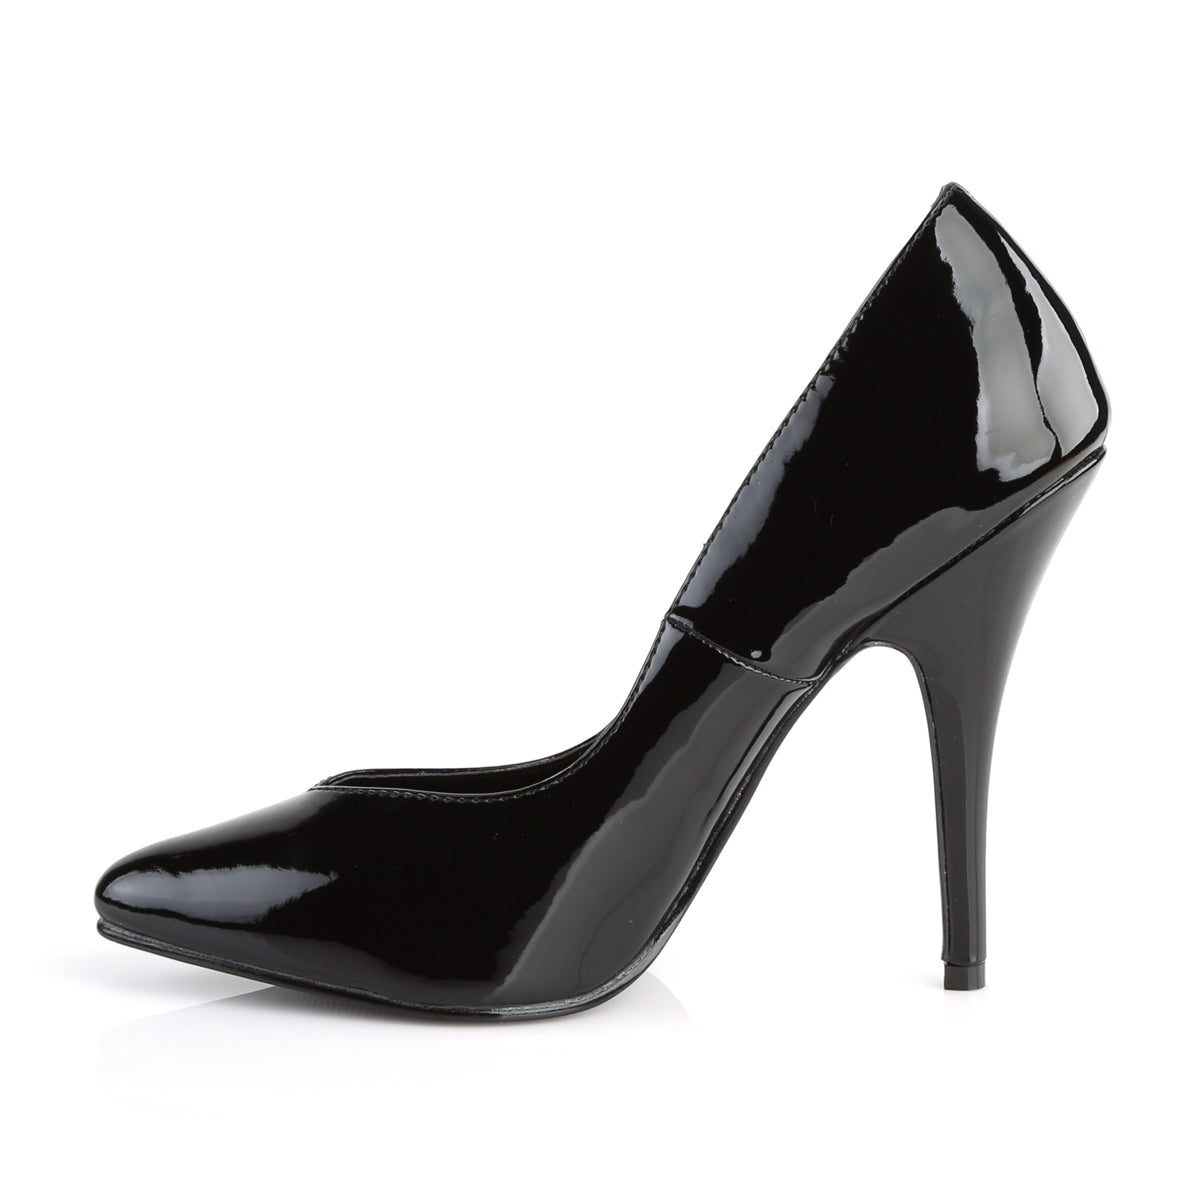 SEDUCE-420V Sexy Shoes 5" Heel Black Patent Fetish Footwear-Pleaser- Sexy Shoes Pole Dance Heels